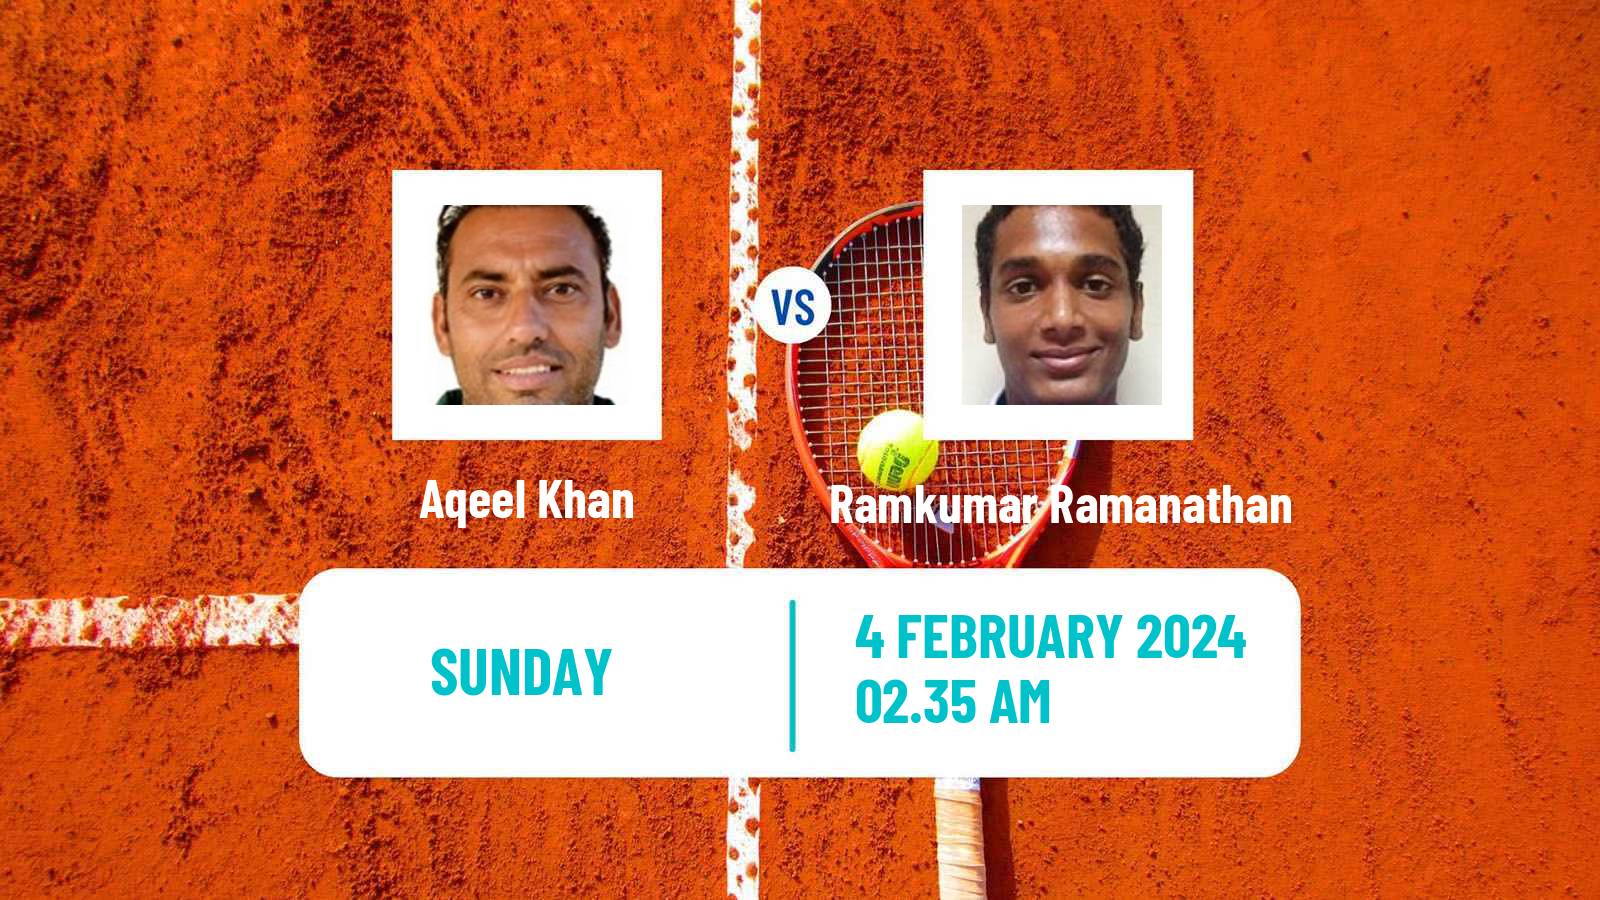 Tennis Davis Cup World Group I Aqeel Khan - Ramkumar Ramanathan